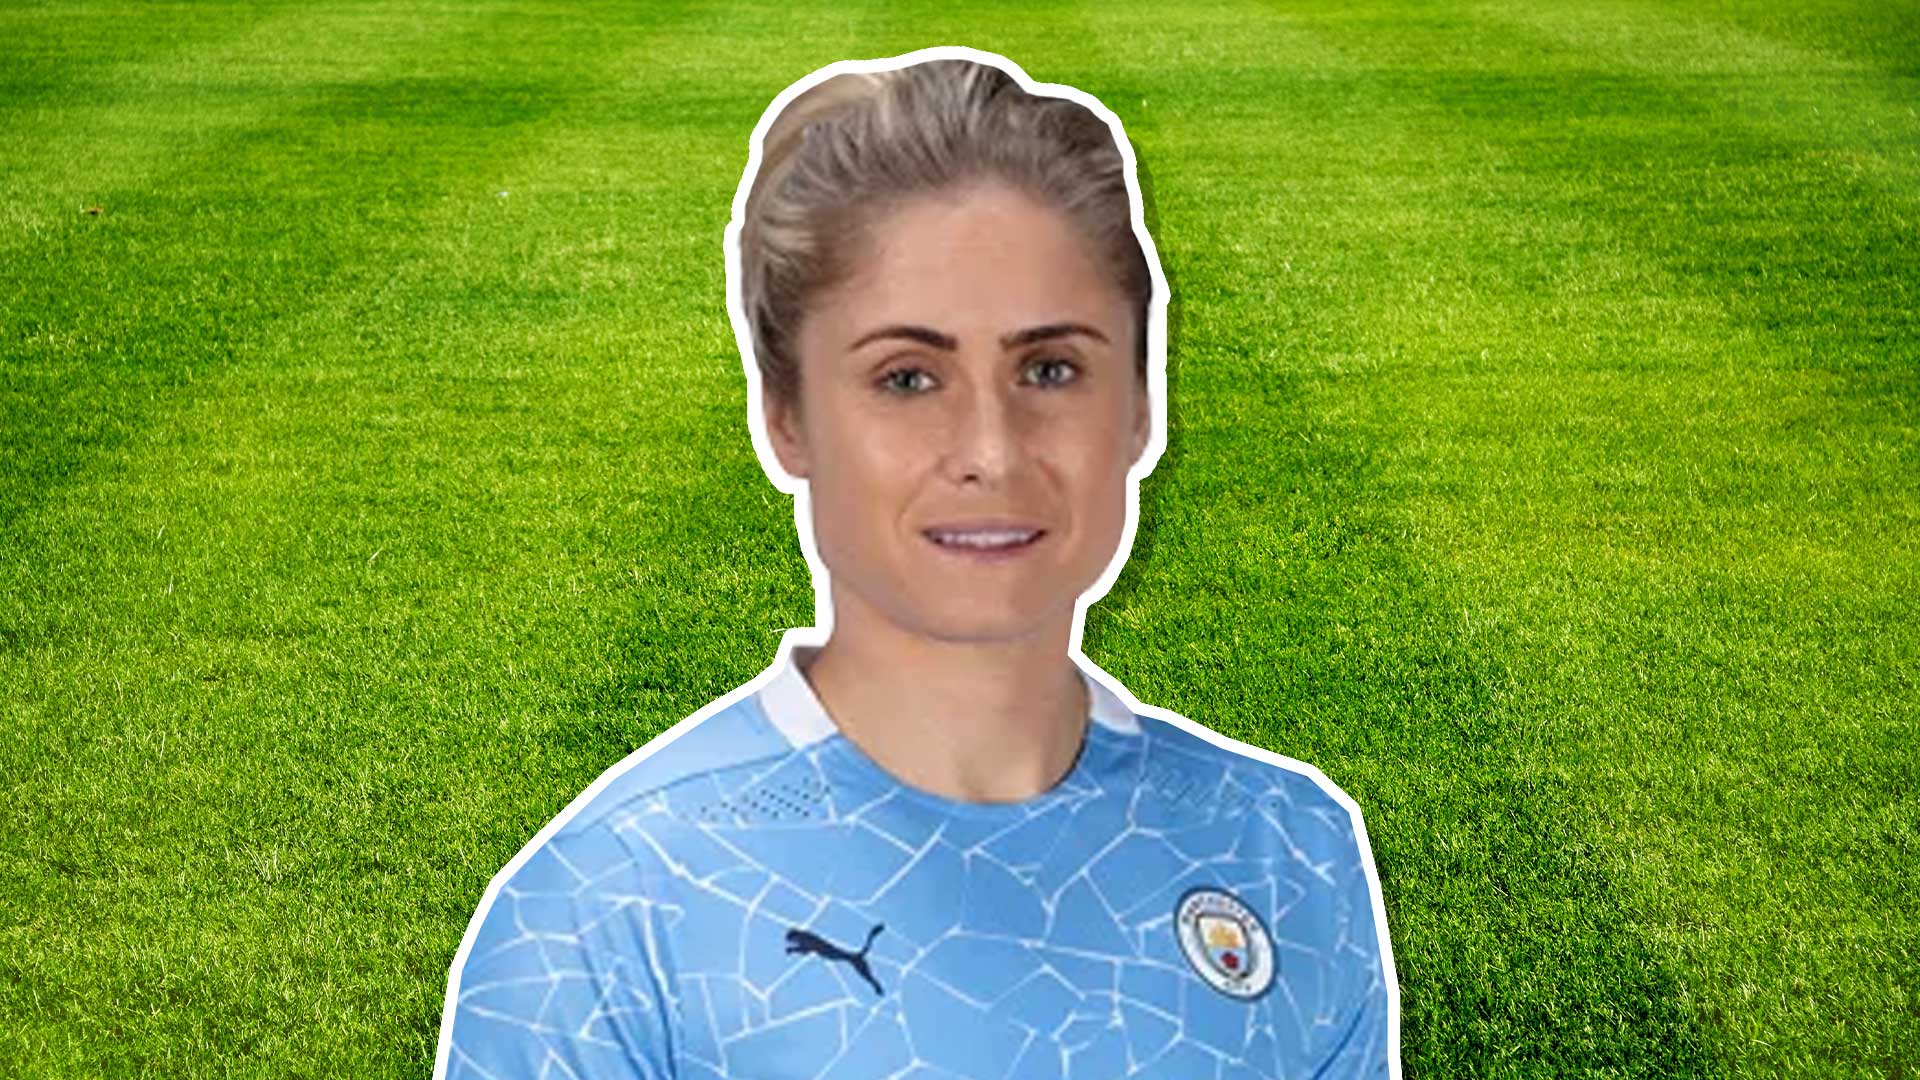 Steph Houghton of Manchester City Women's team